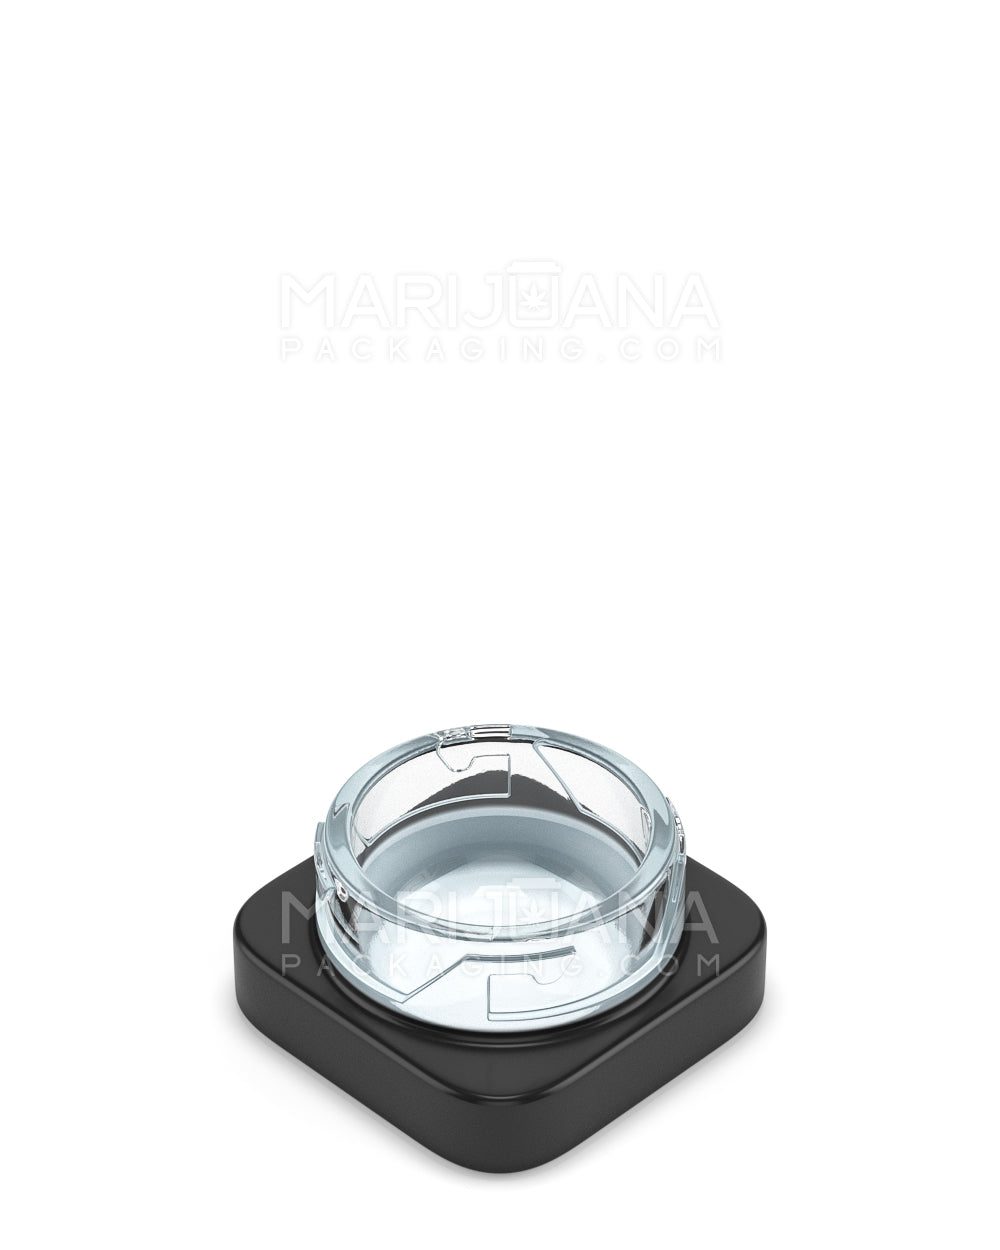 Child Resistant | Qube Black Glass Concentrate Jar w/ White Interior & Black Cap | 32mm - 5mL - 250 Count - 3